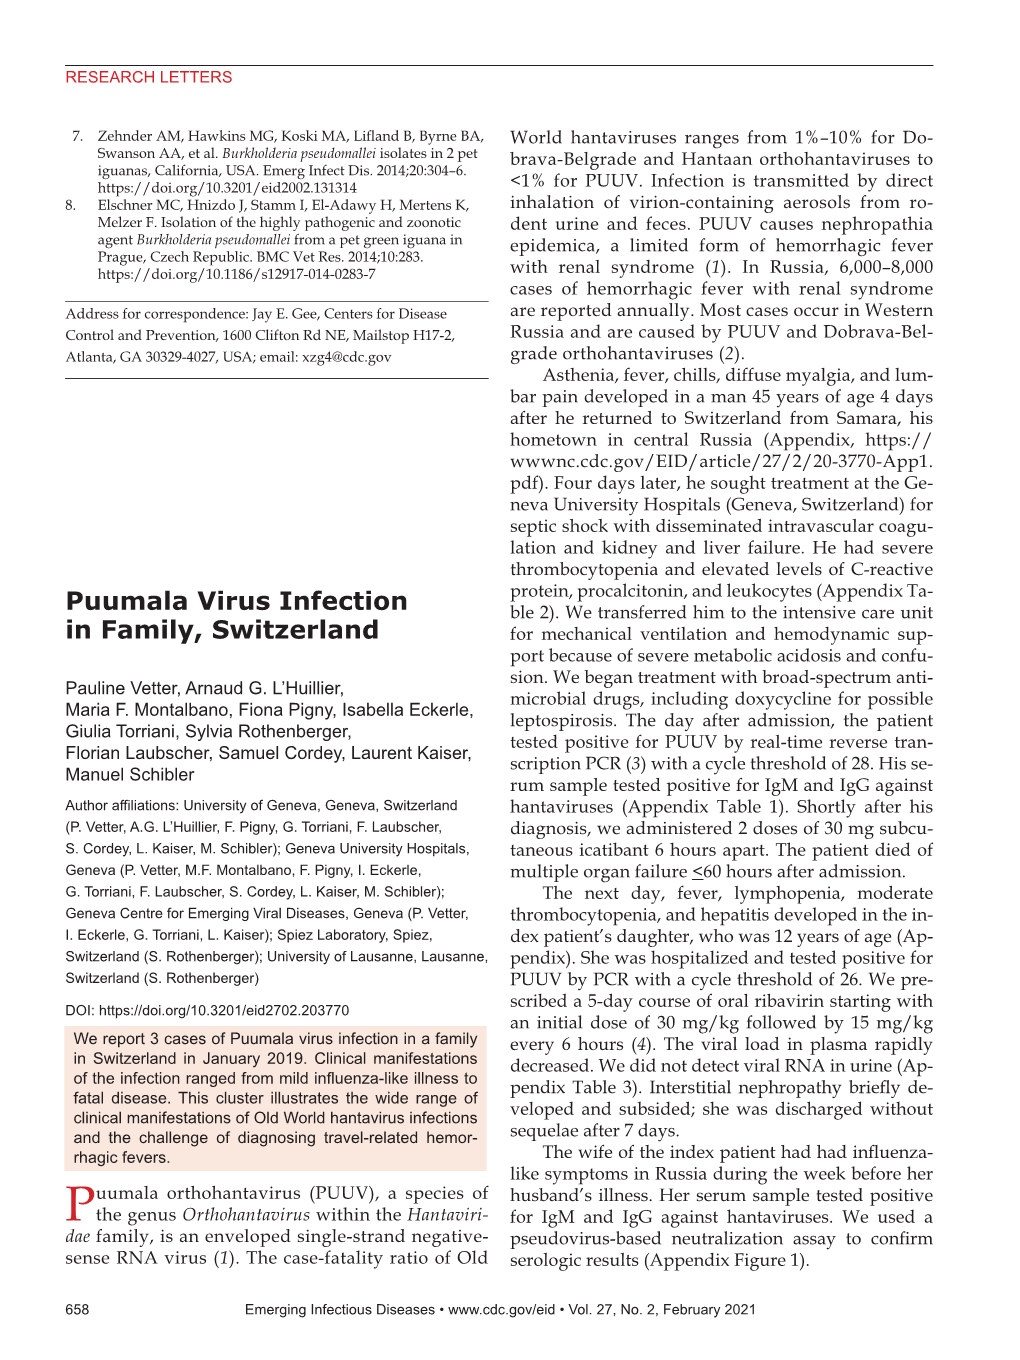 Puumala Virus Infection in Family, Switzerland